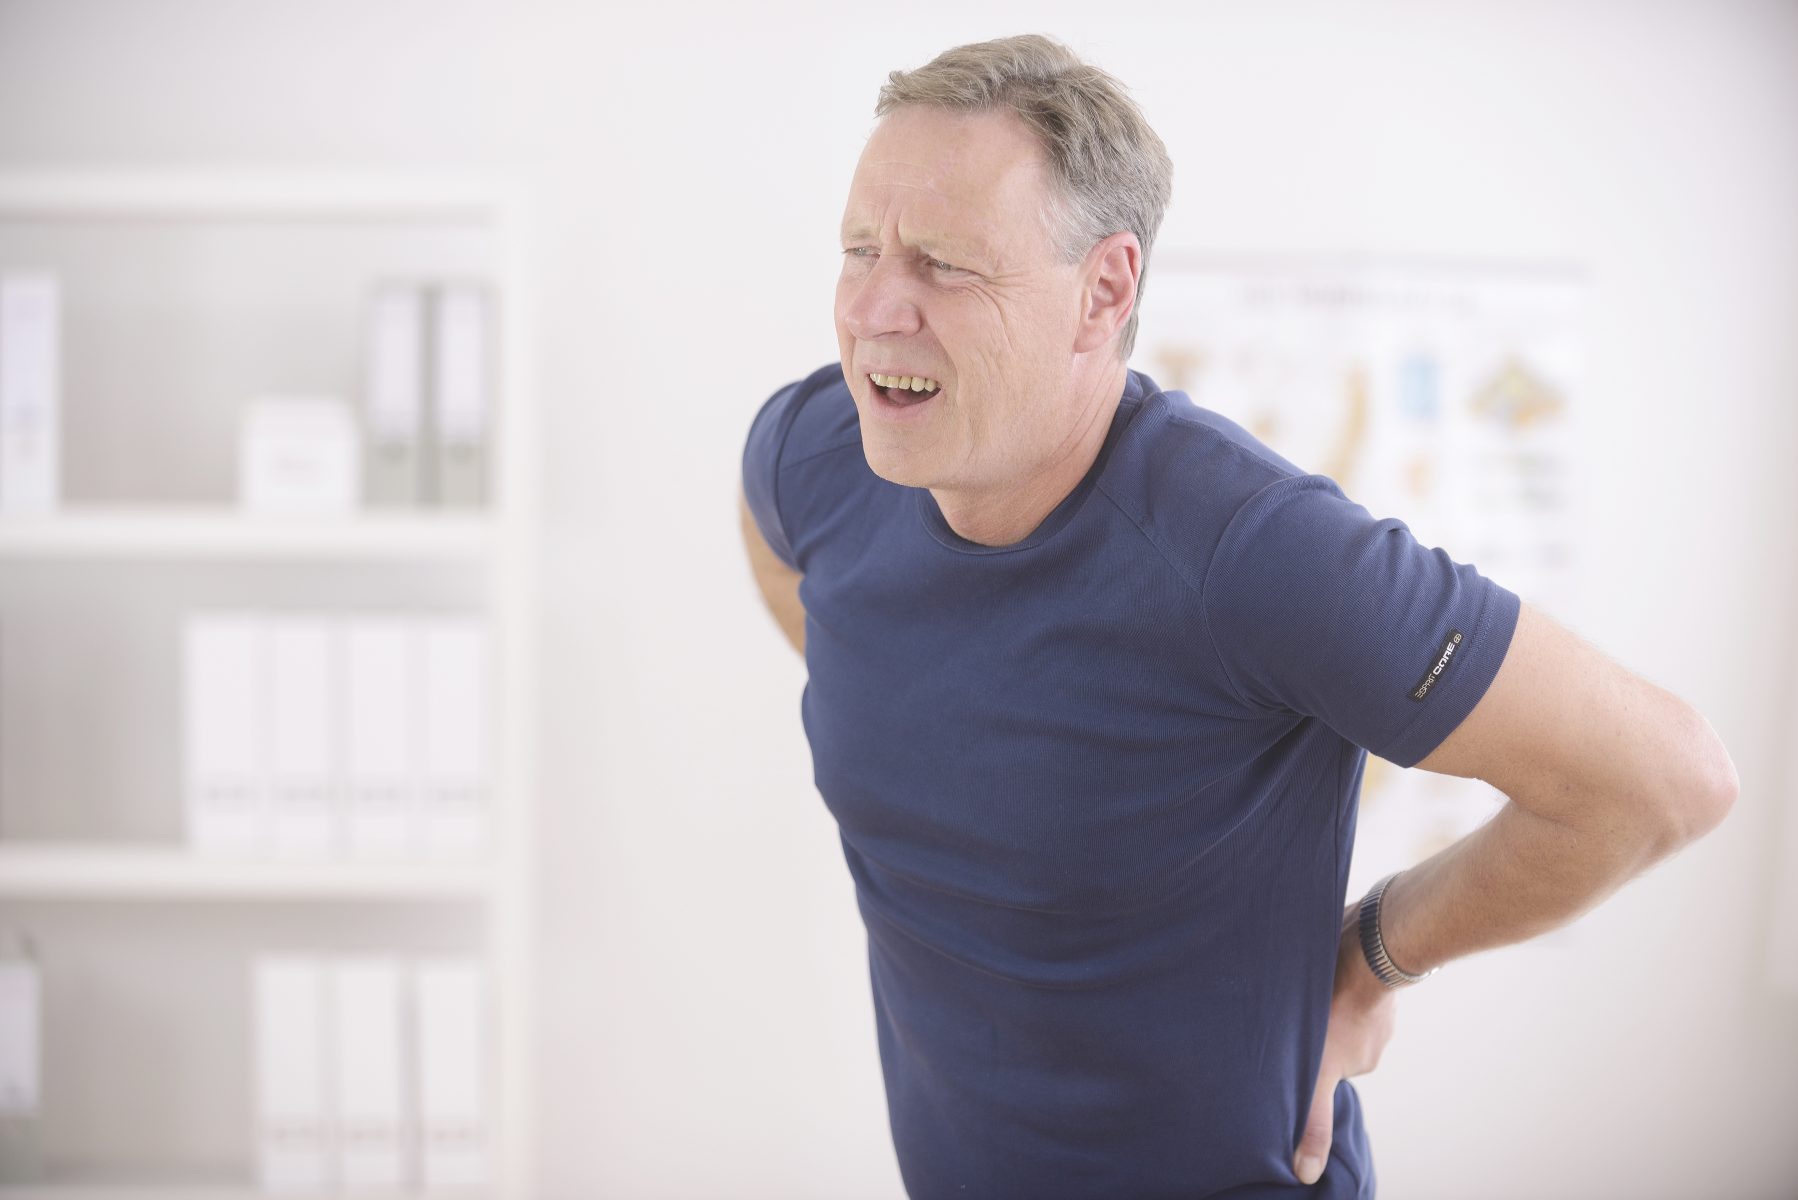 Chiropractors treat musculoskeletal problems